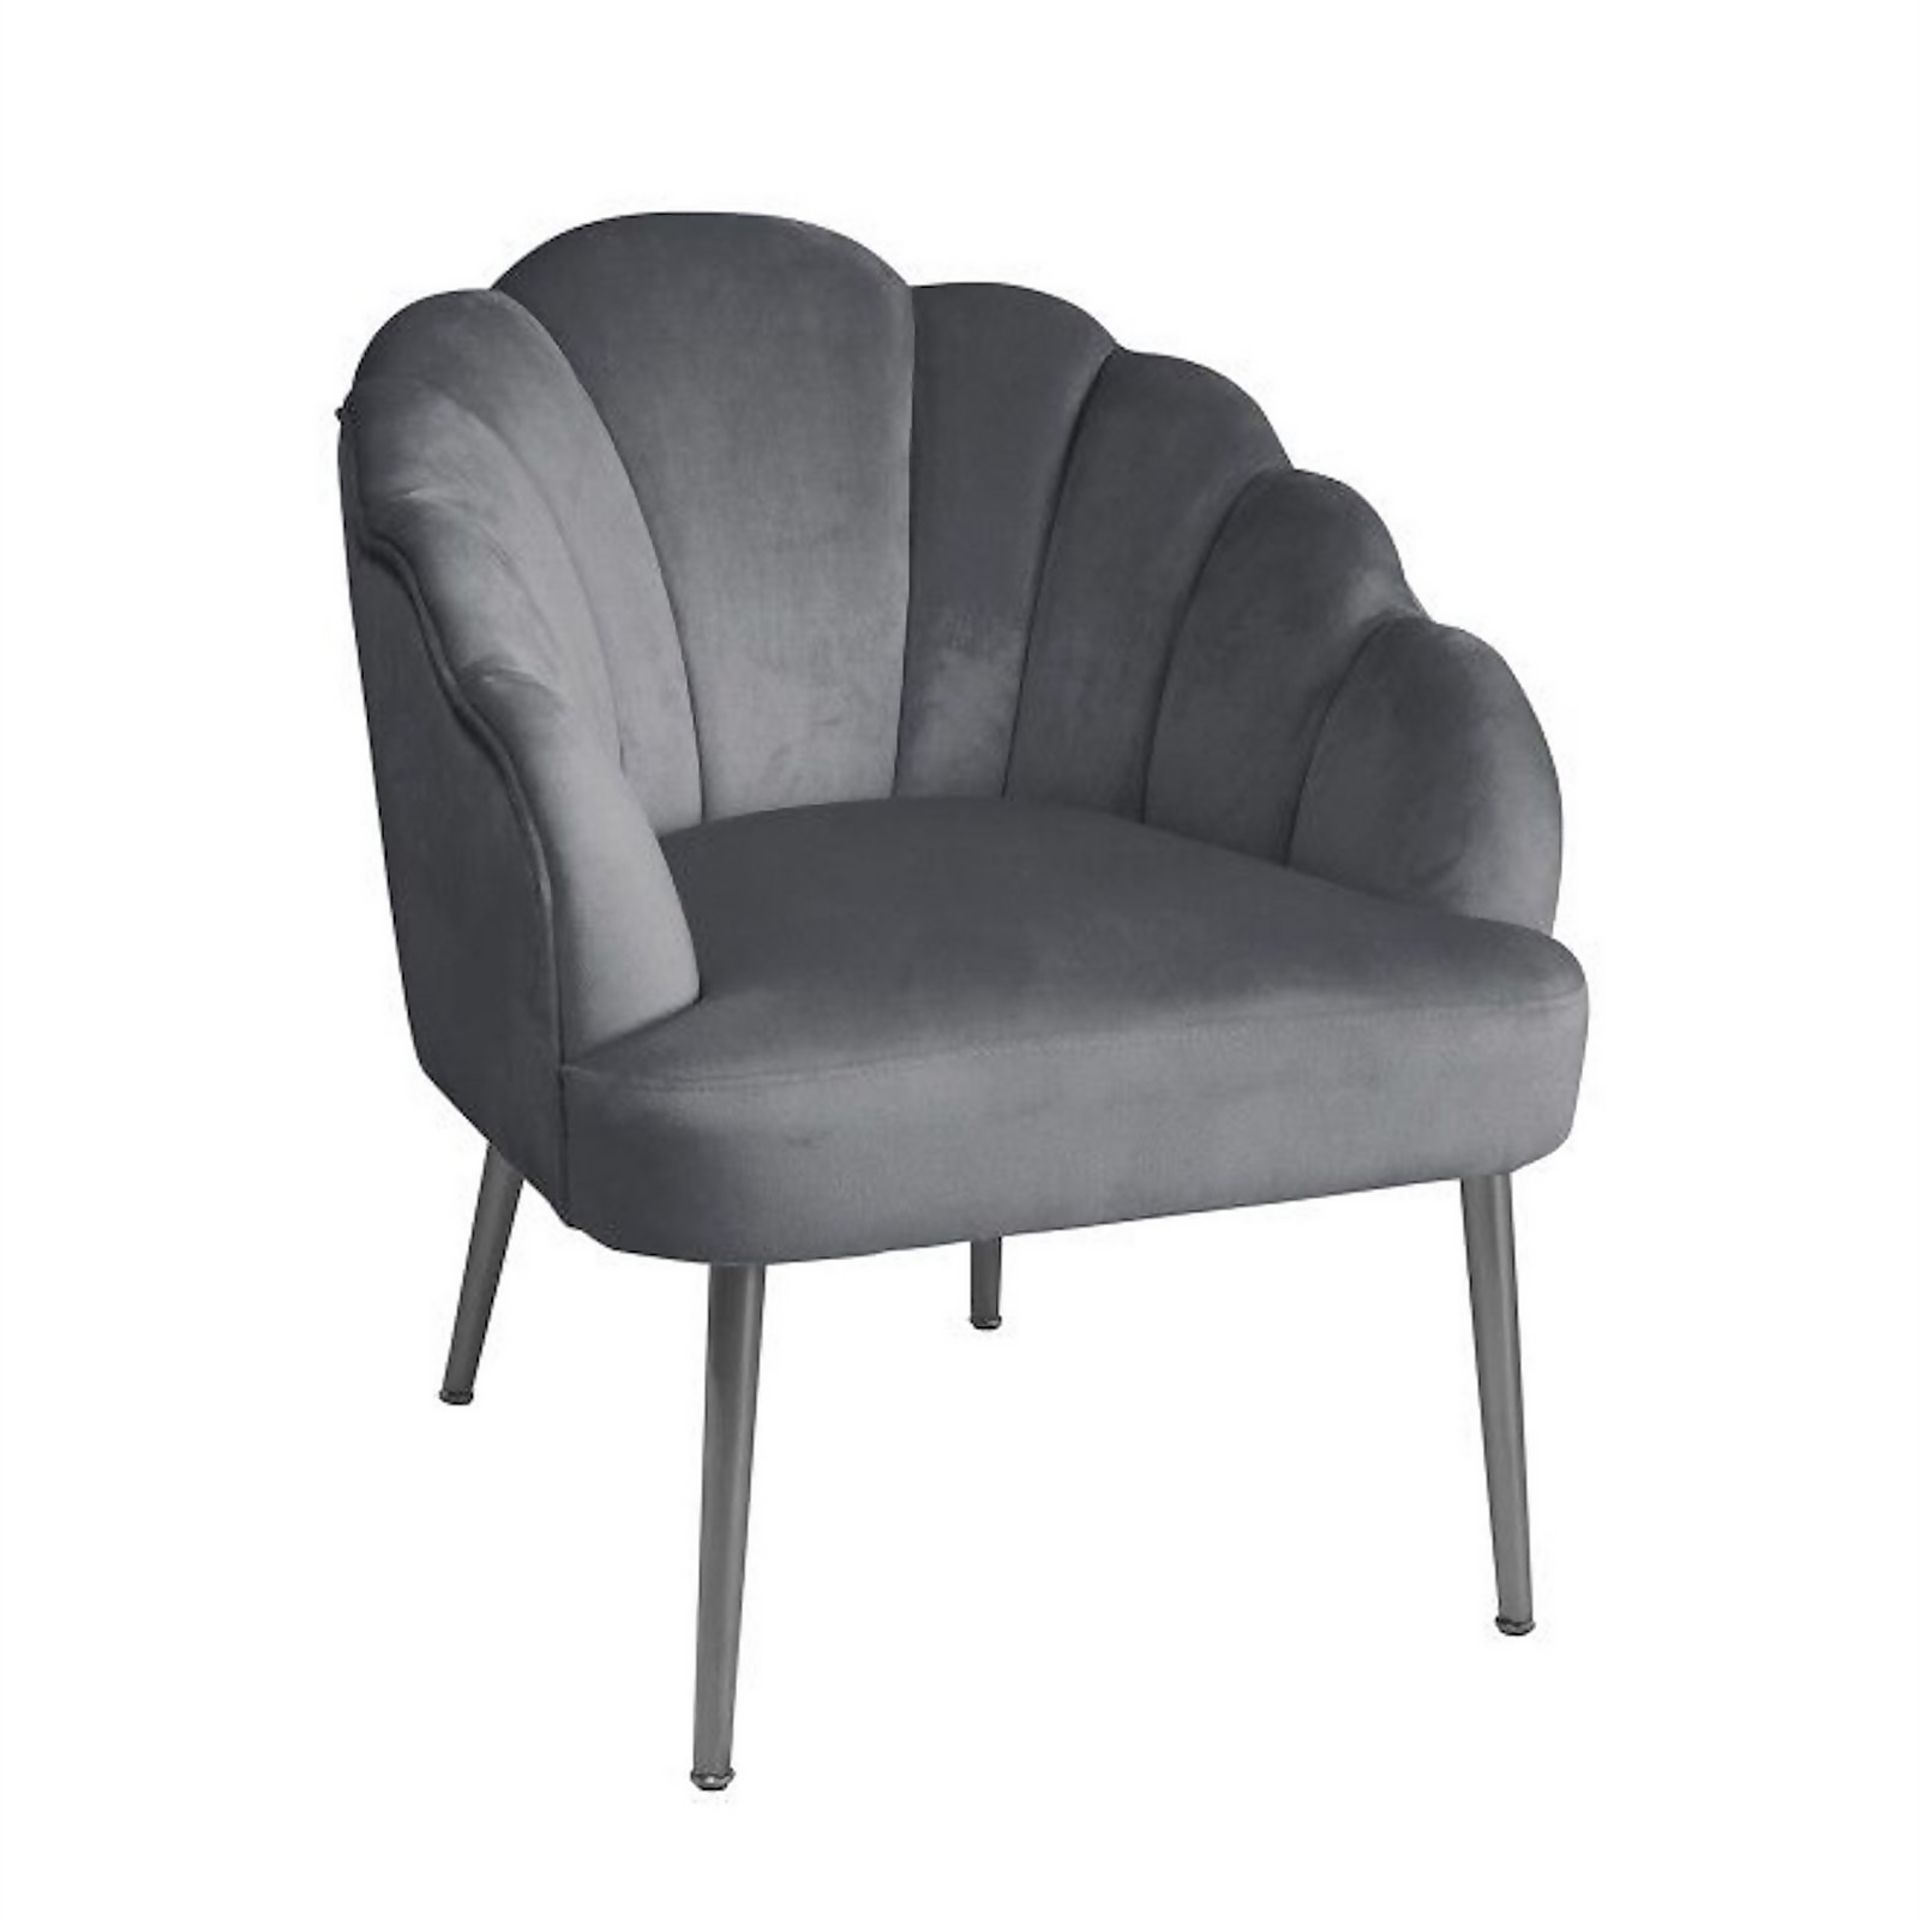 (R2P) 1 X Sophia Occasional Chair Grey. Velvet Fabric Cover. Metal Legs. (H77 x W64 x D71cm)